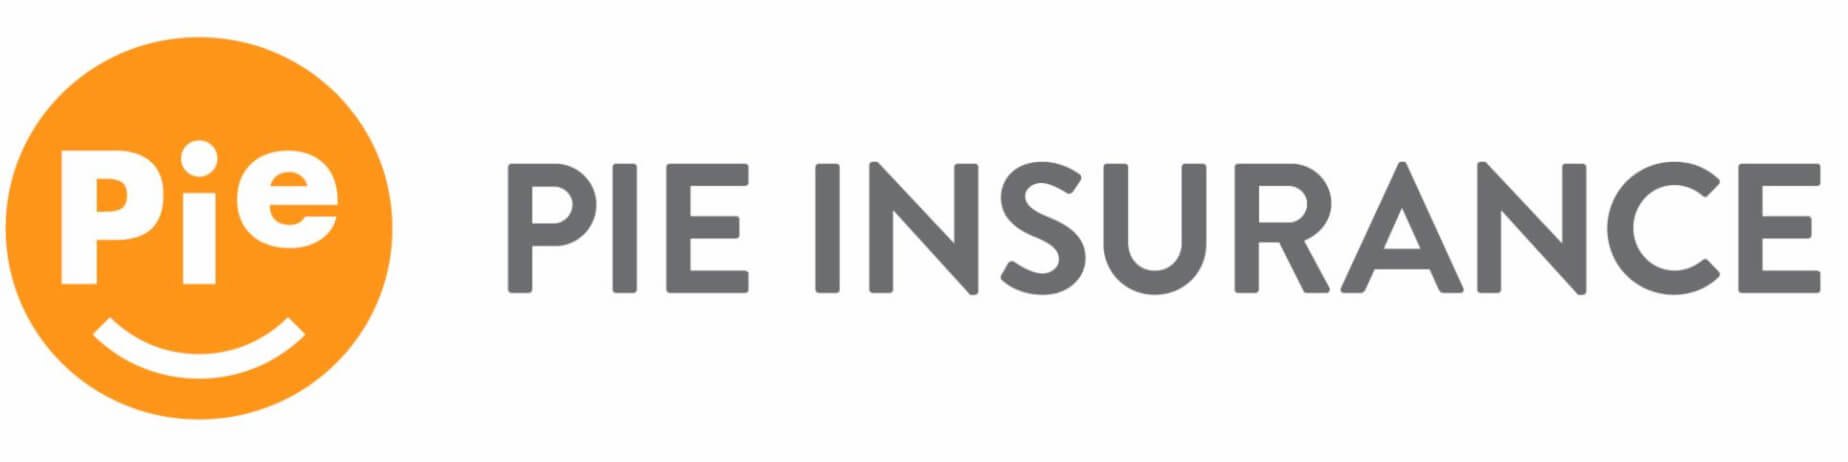 Pie Insurance Logo.jpeg